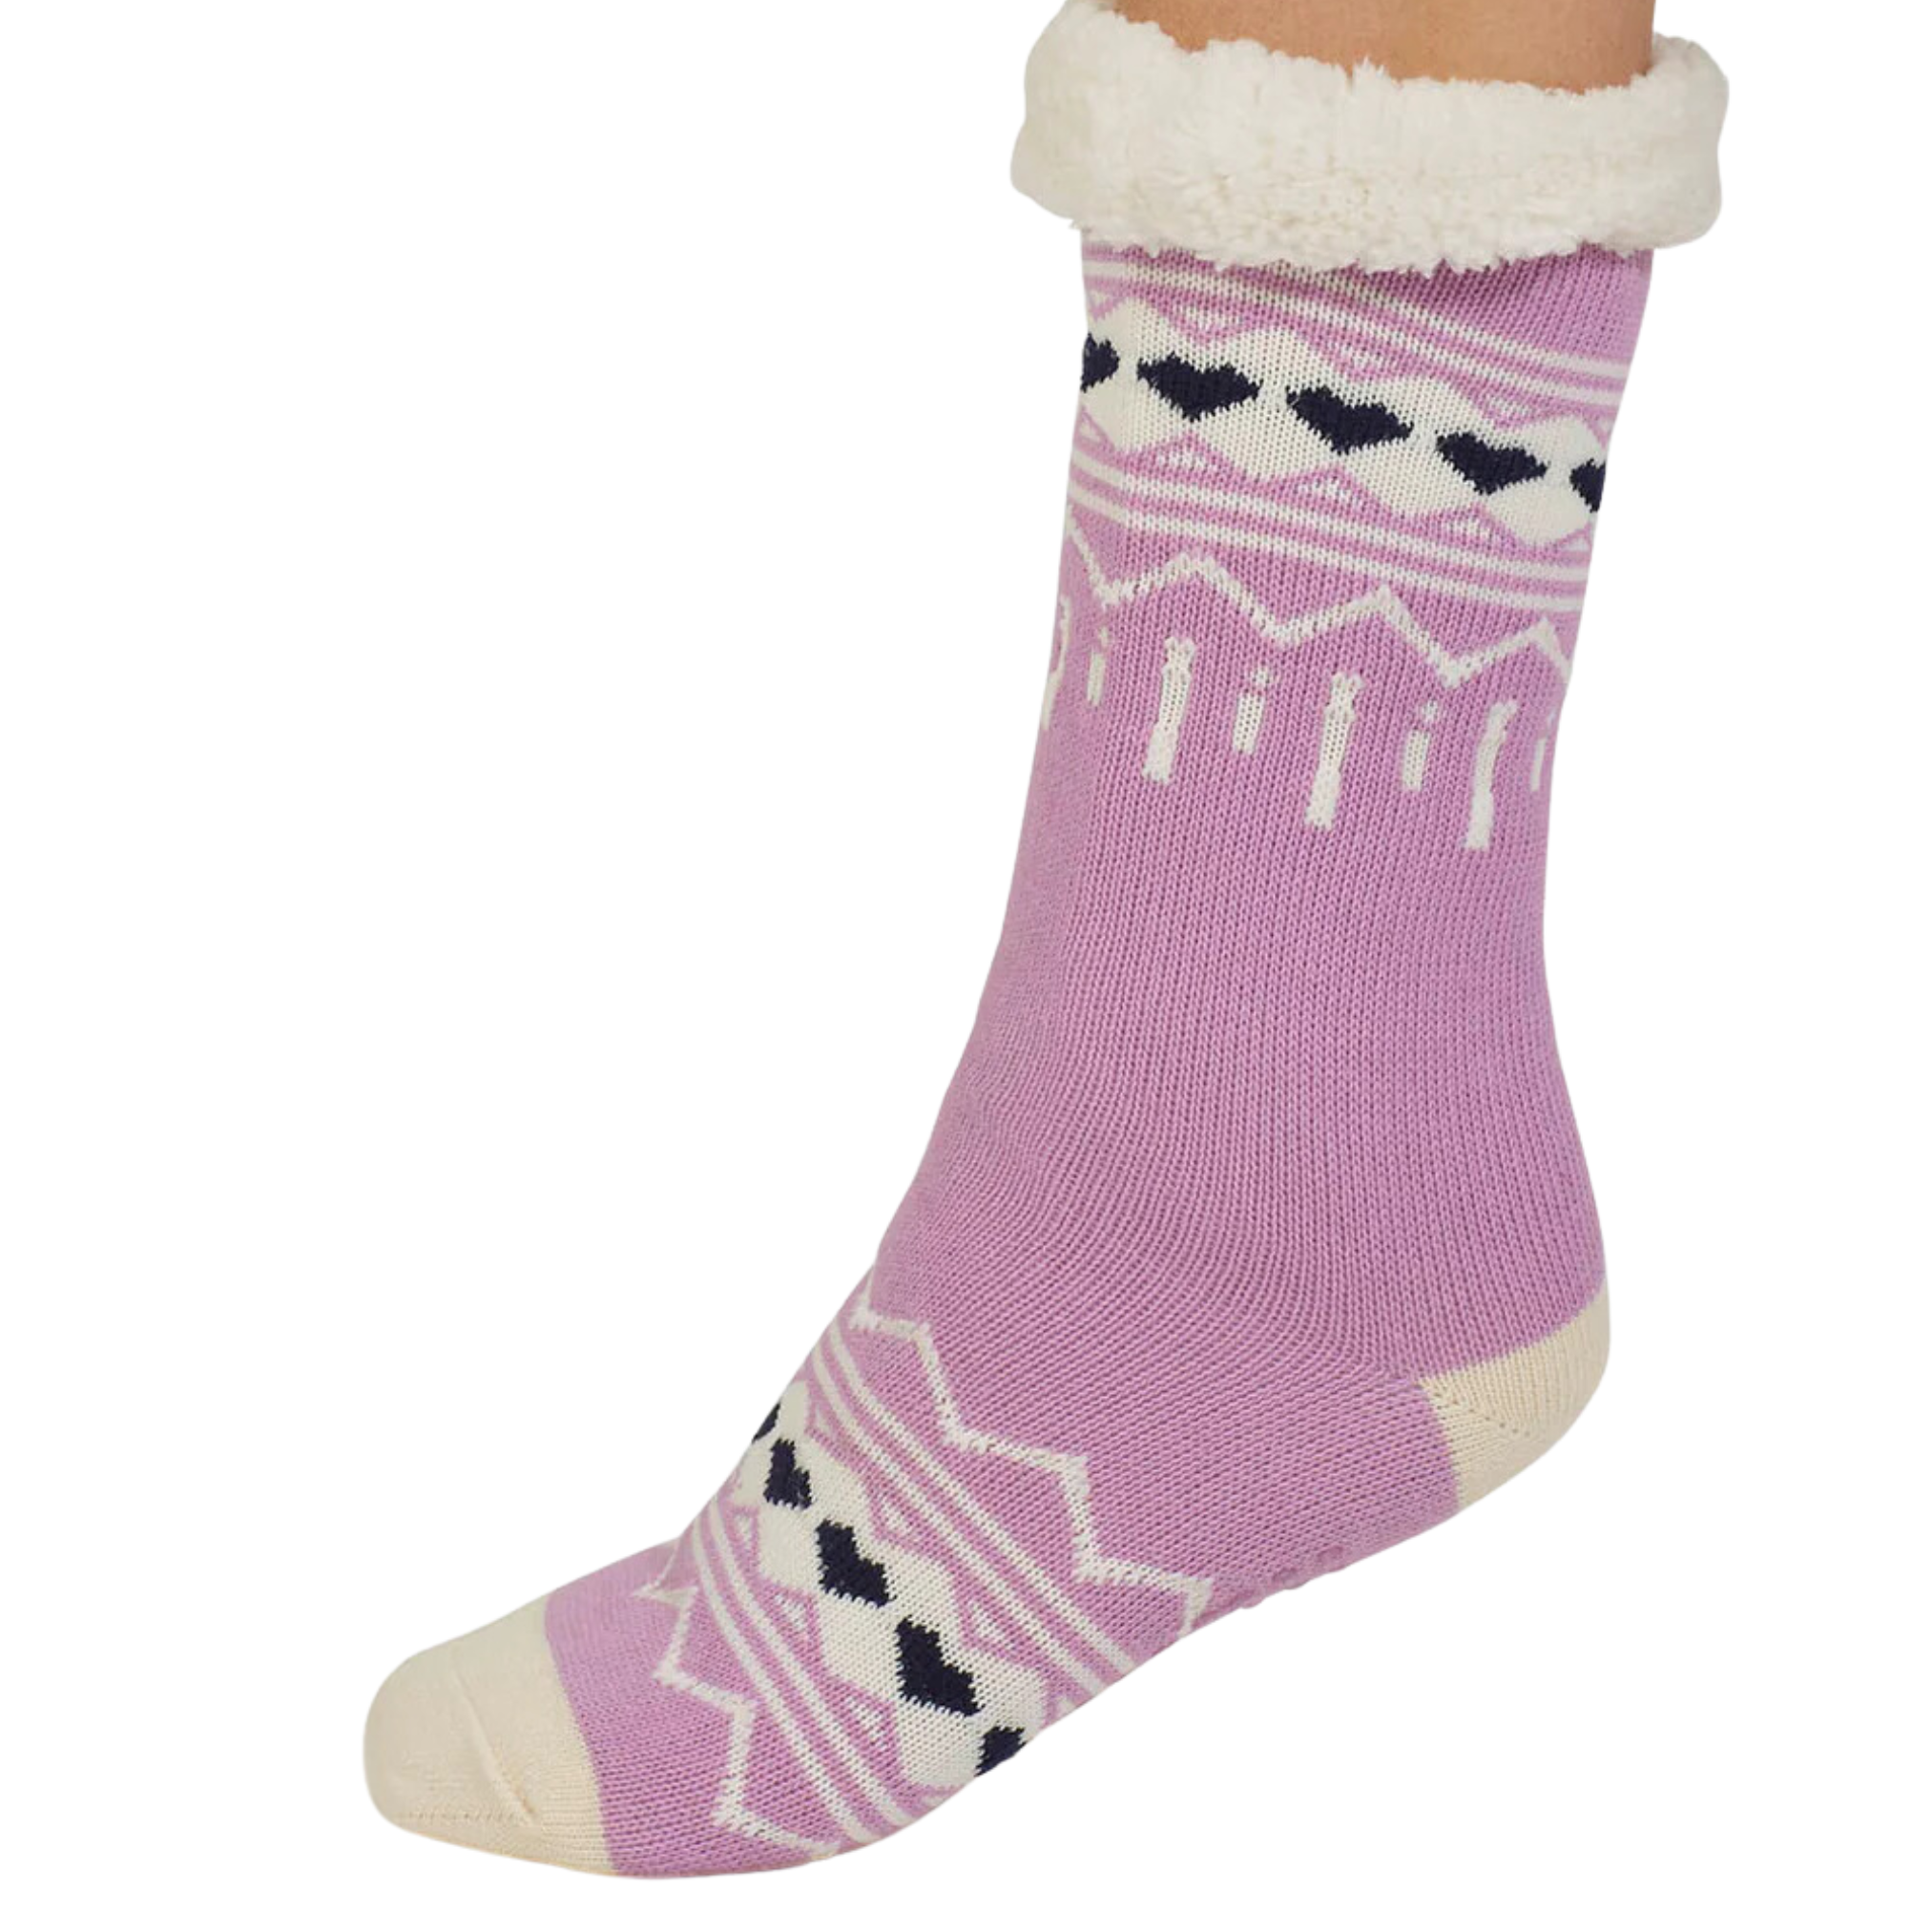 Ilah Fair Isle Slipper Socks (Women's)